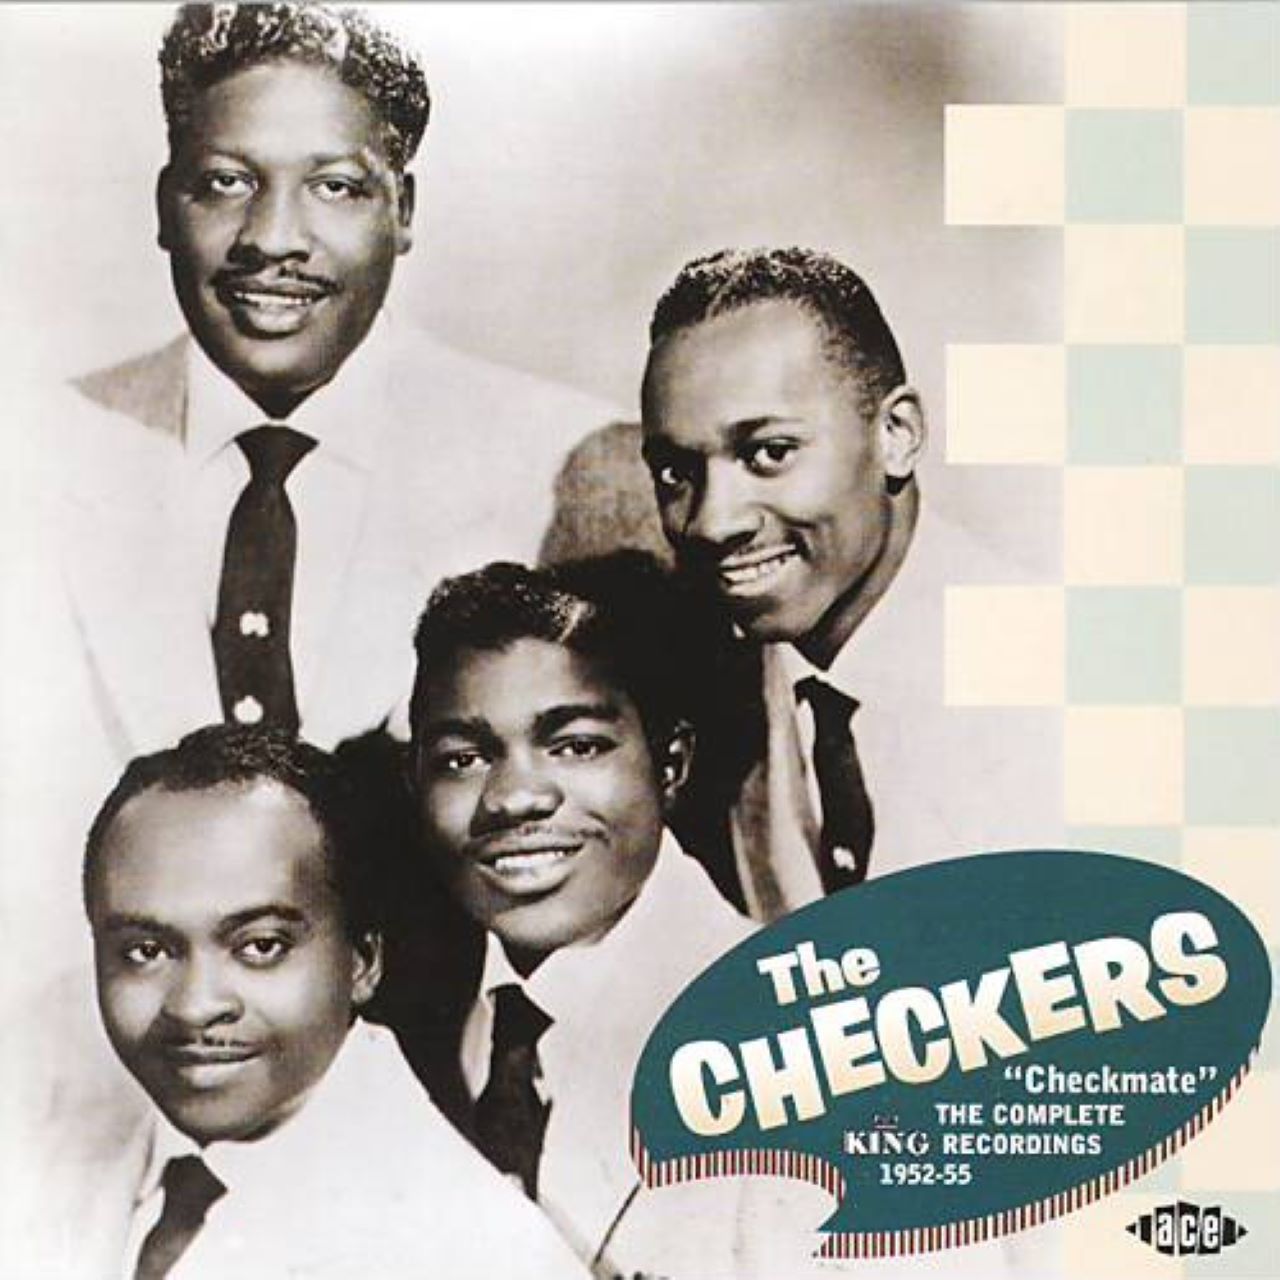 Checkers - Checkmate cover album